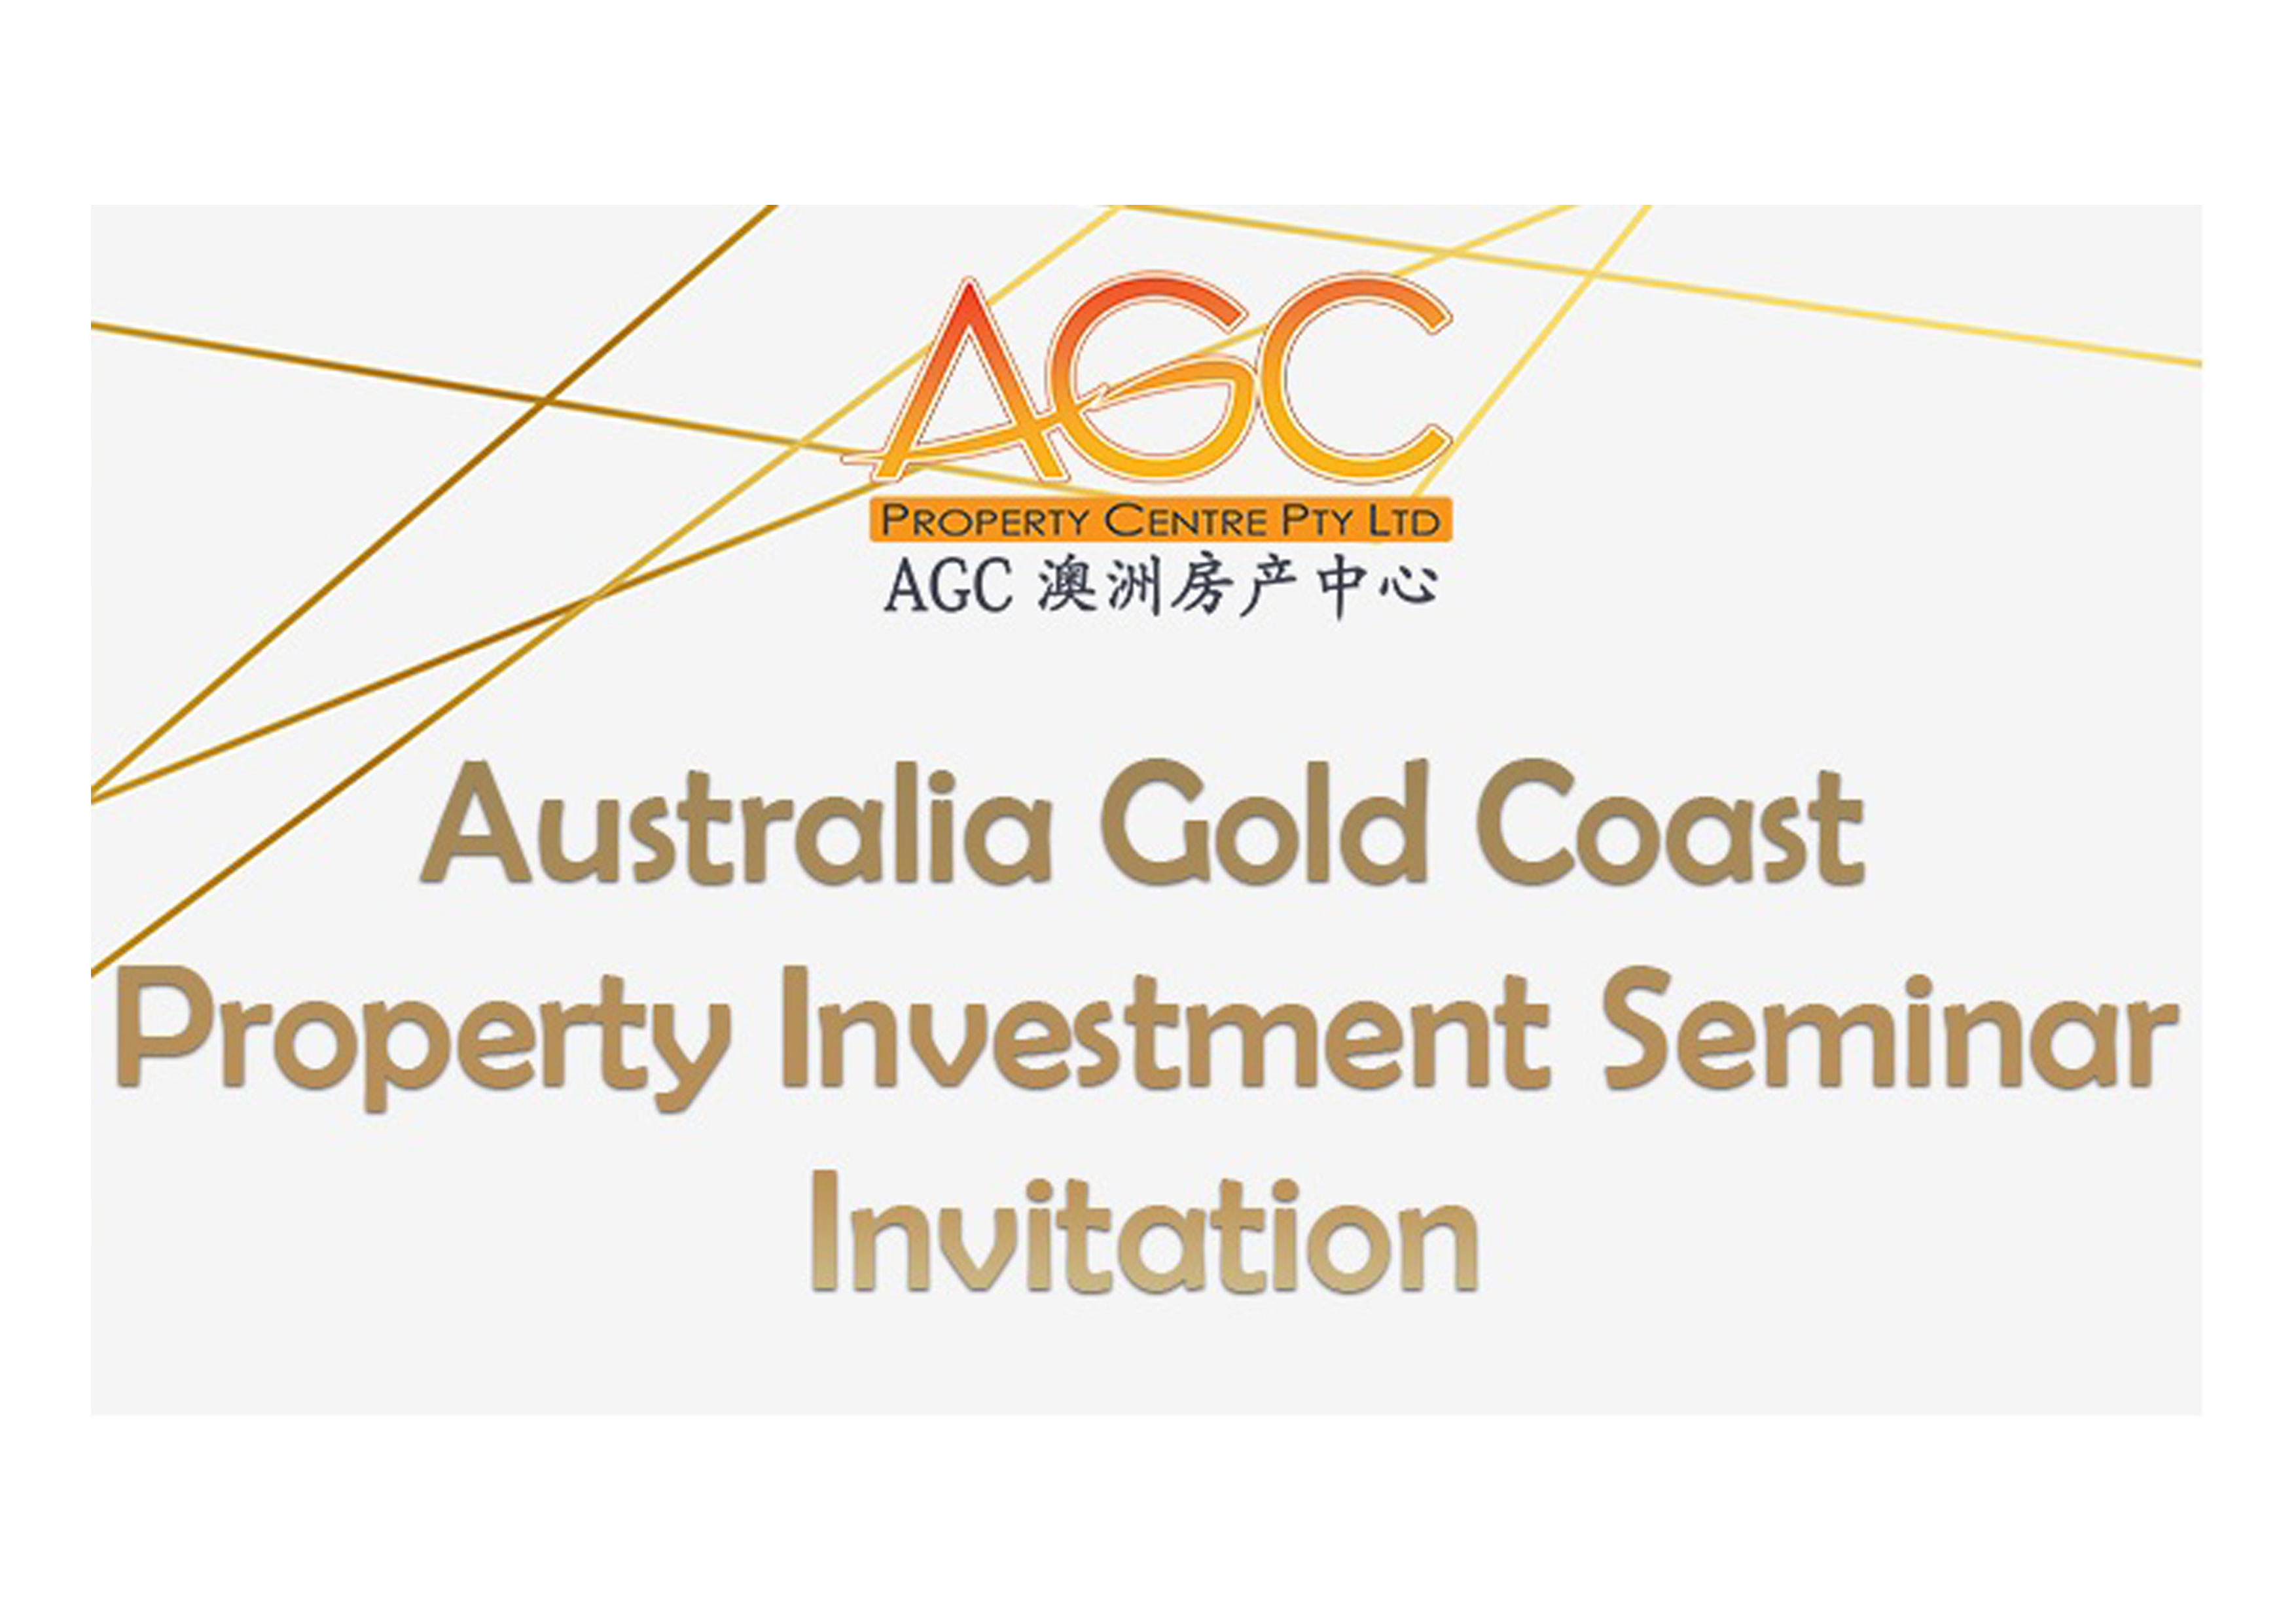 2019 Property Investment Seminar Invitation